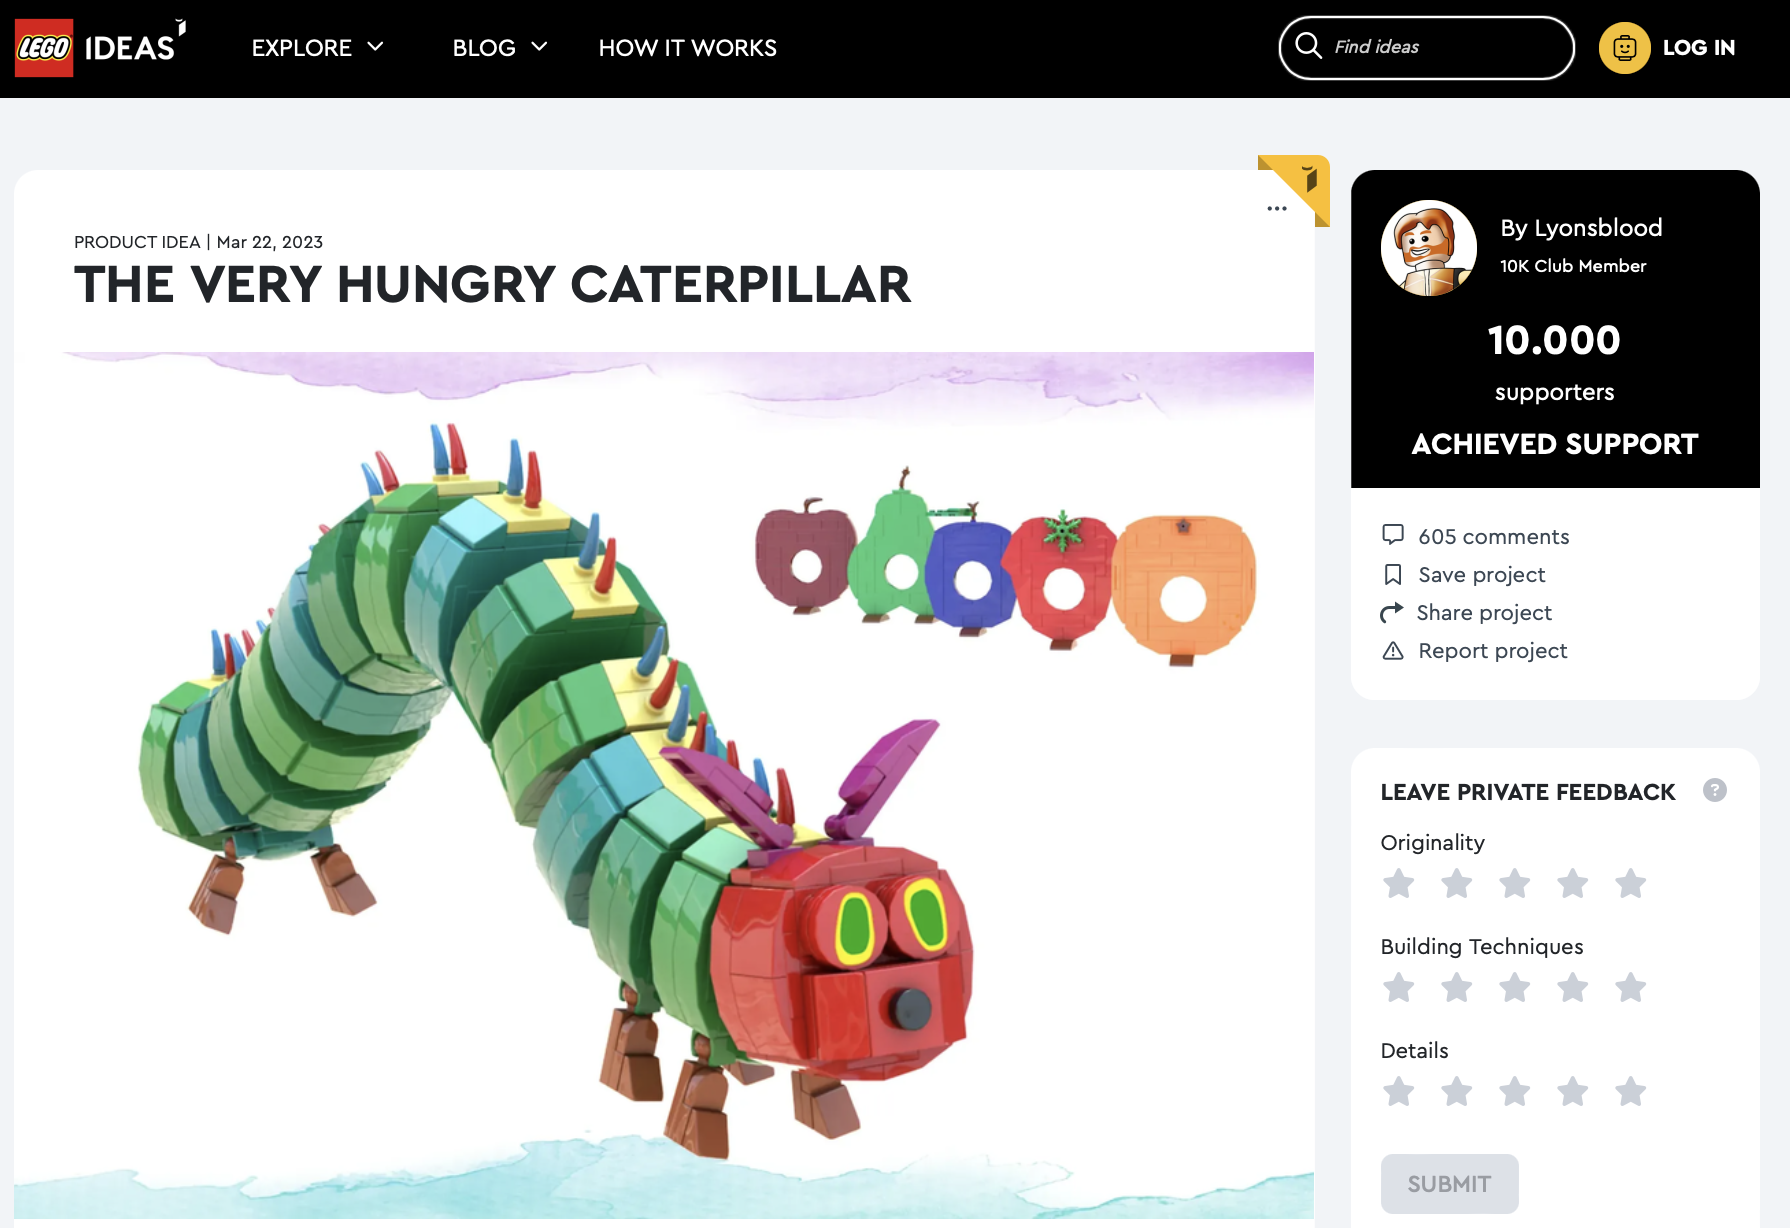 The Very Hungry Caterpillar ha raggiunto i 10.000 like sul portale LEGO Ideas